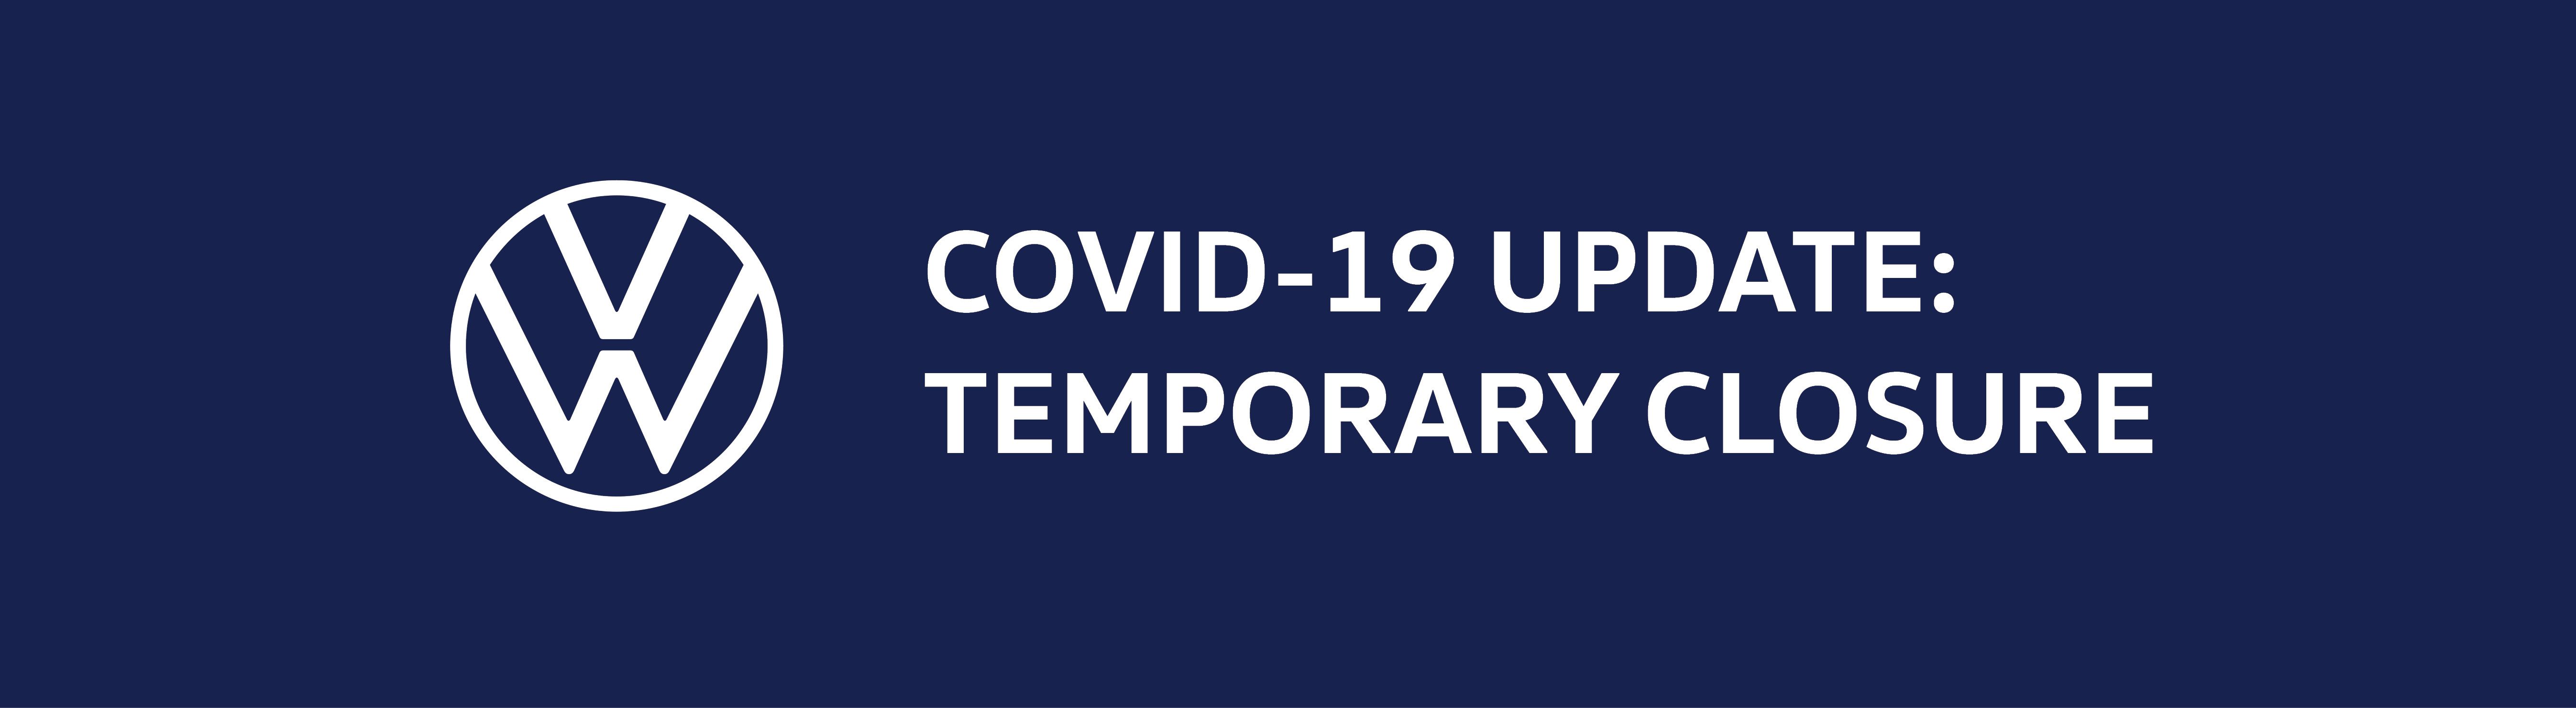 COVID-19: TEMPORARY BUSINESS CLOSURE